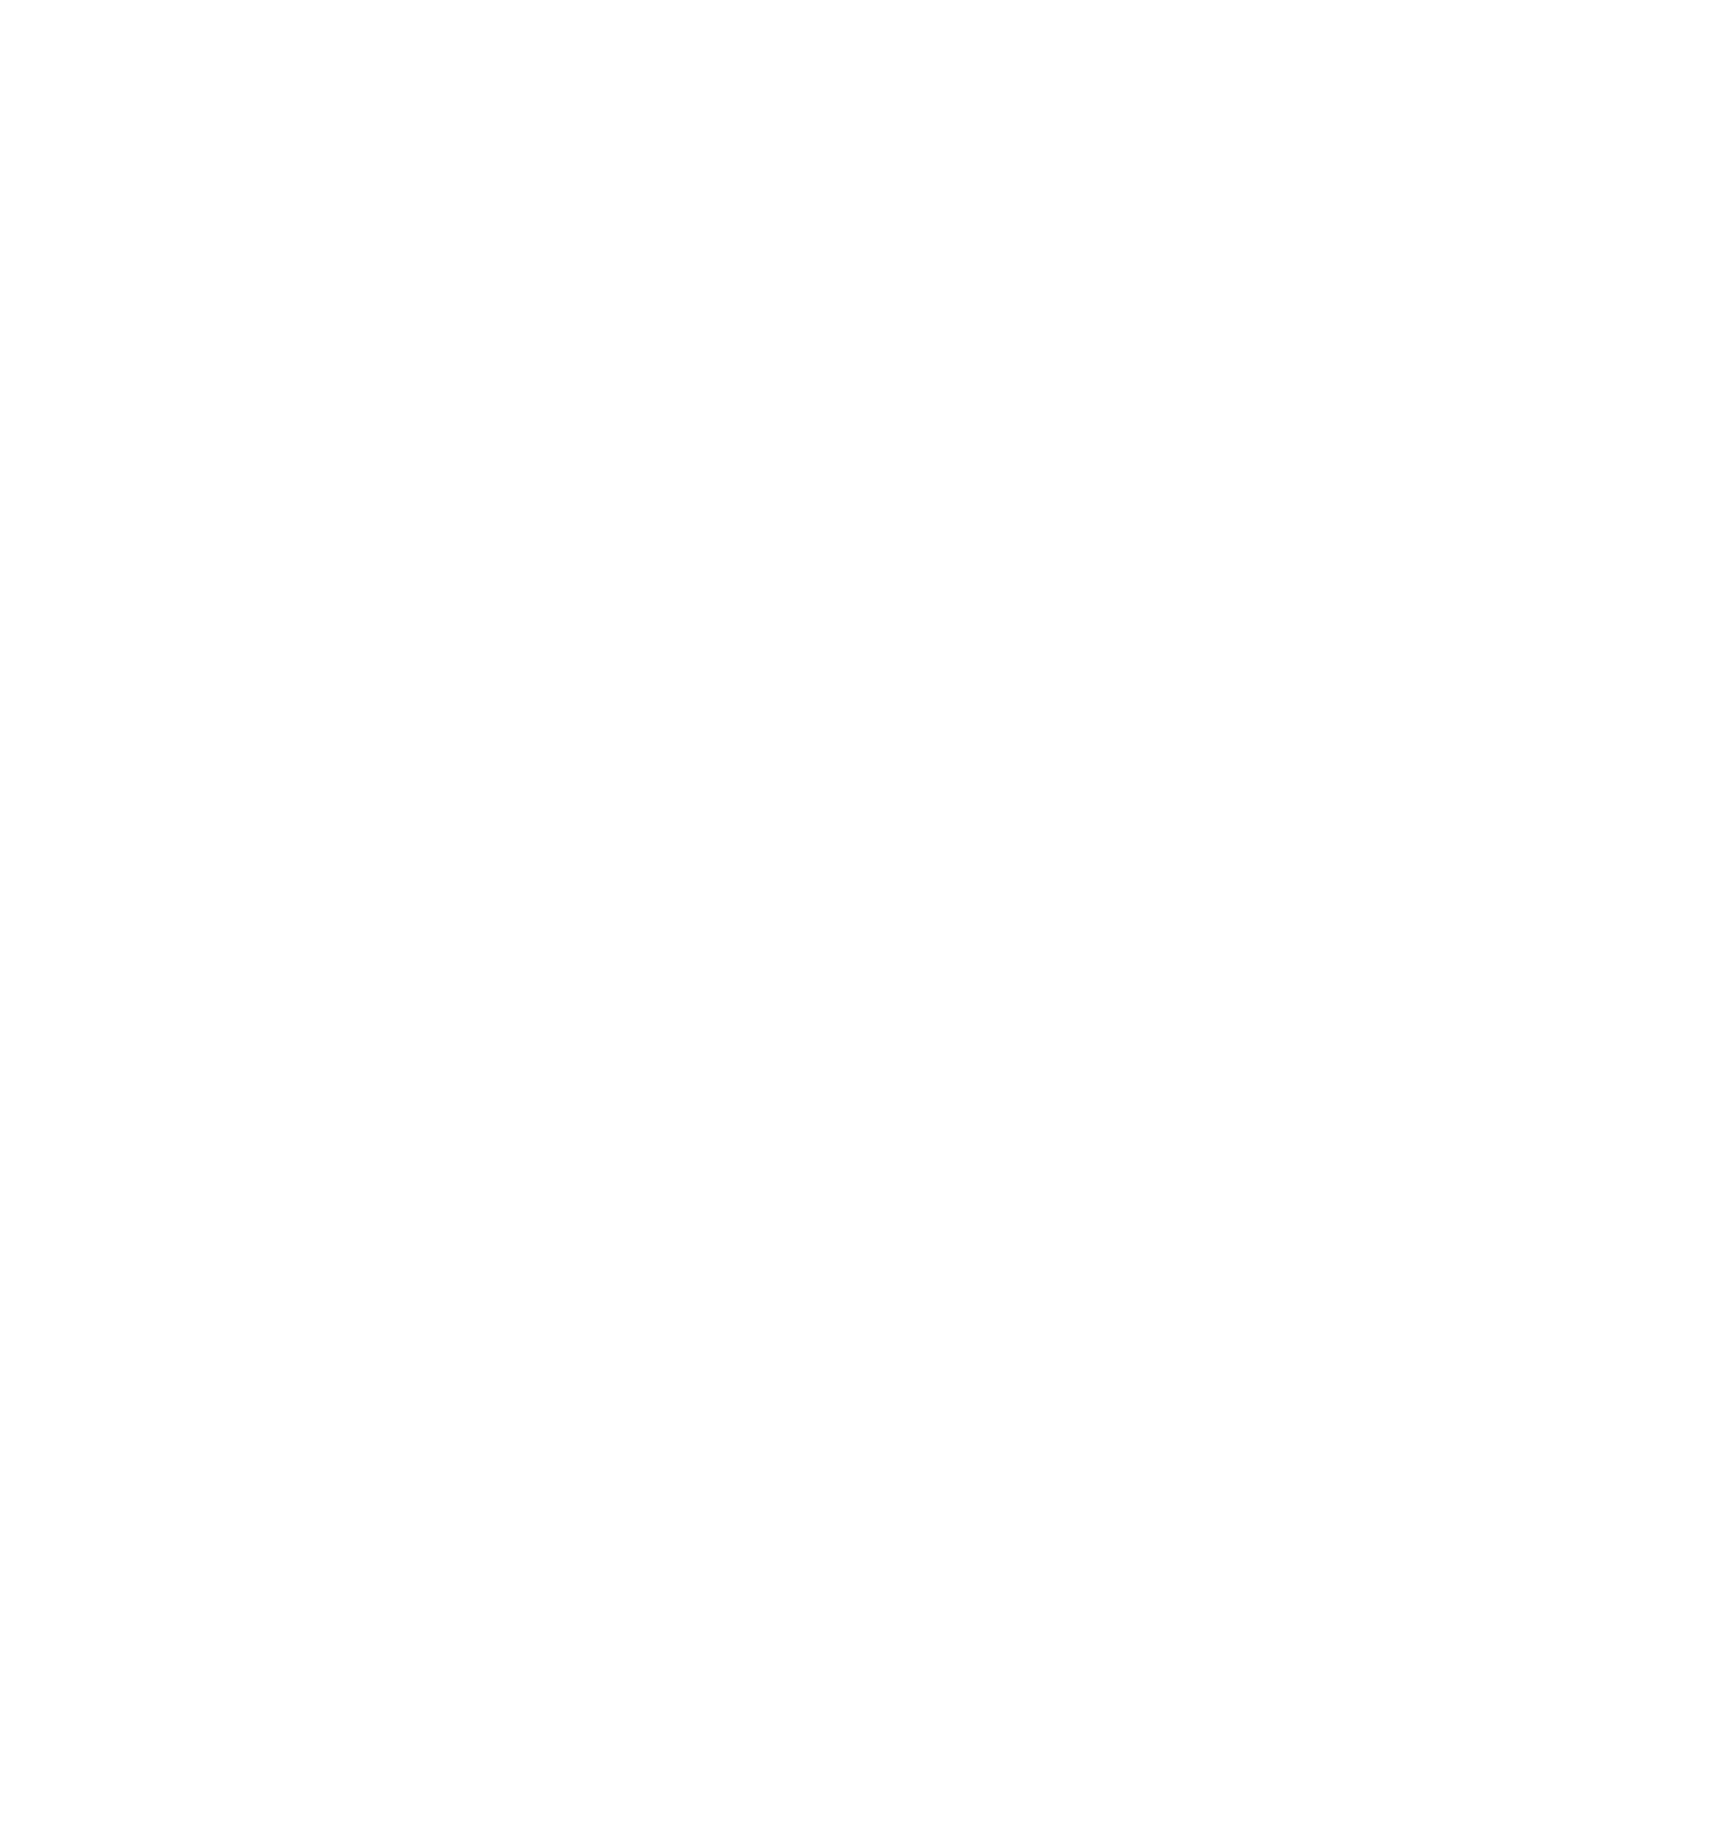 nlp hd logo